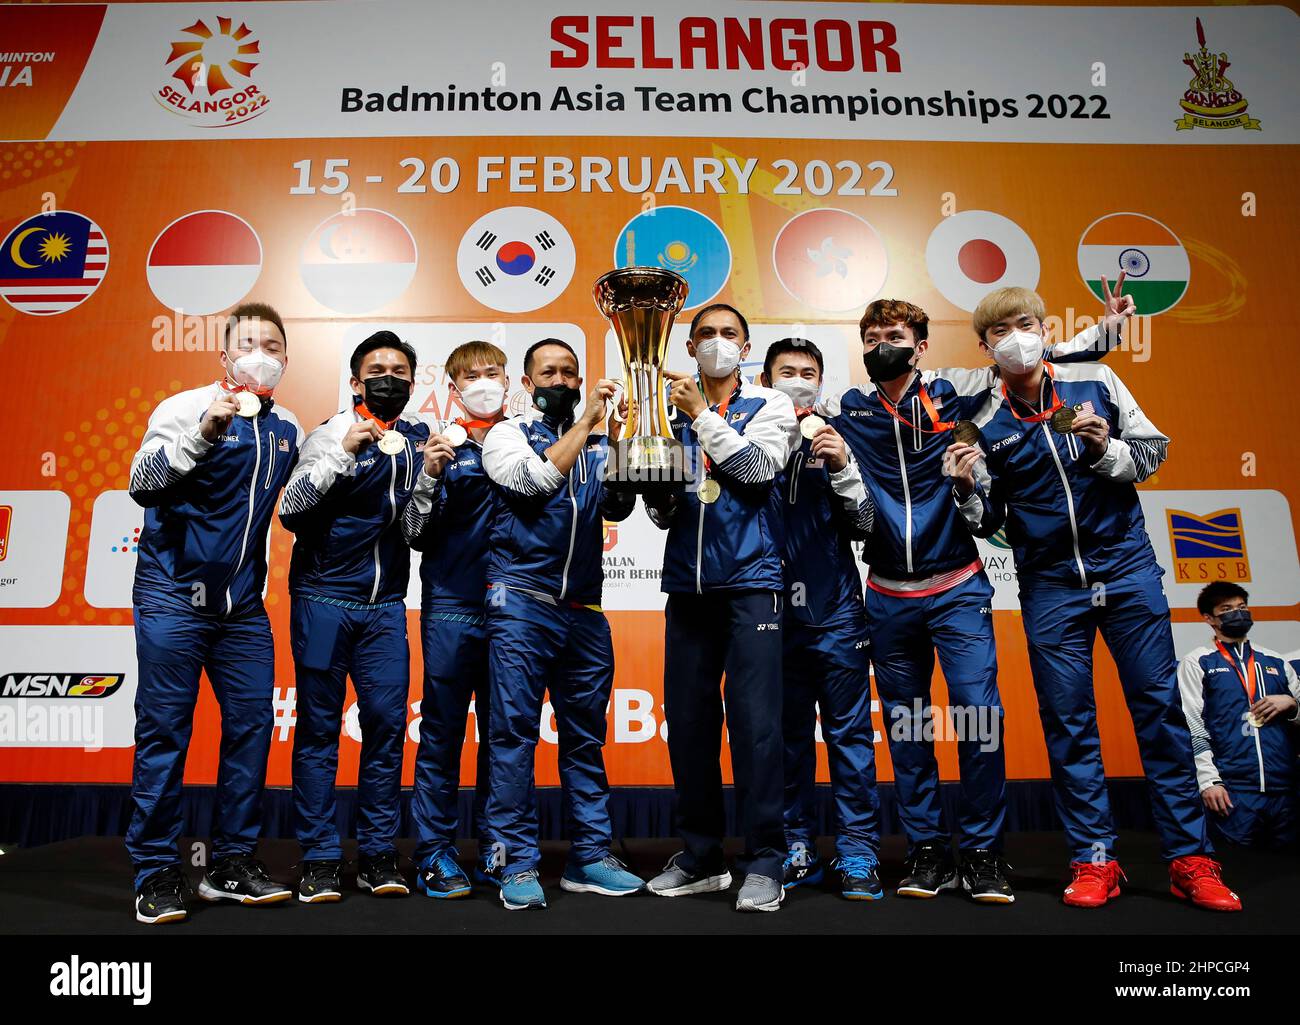 Selangor badminton asia team championships 2022